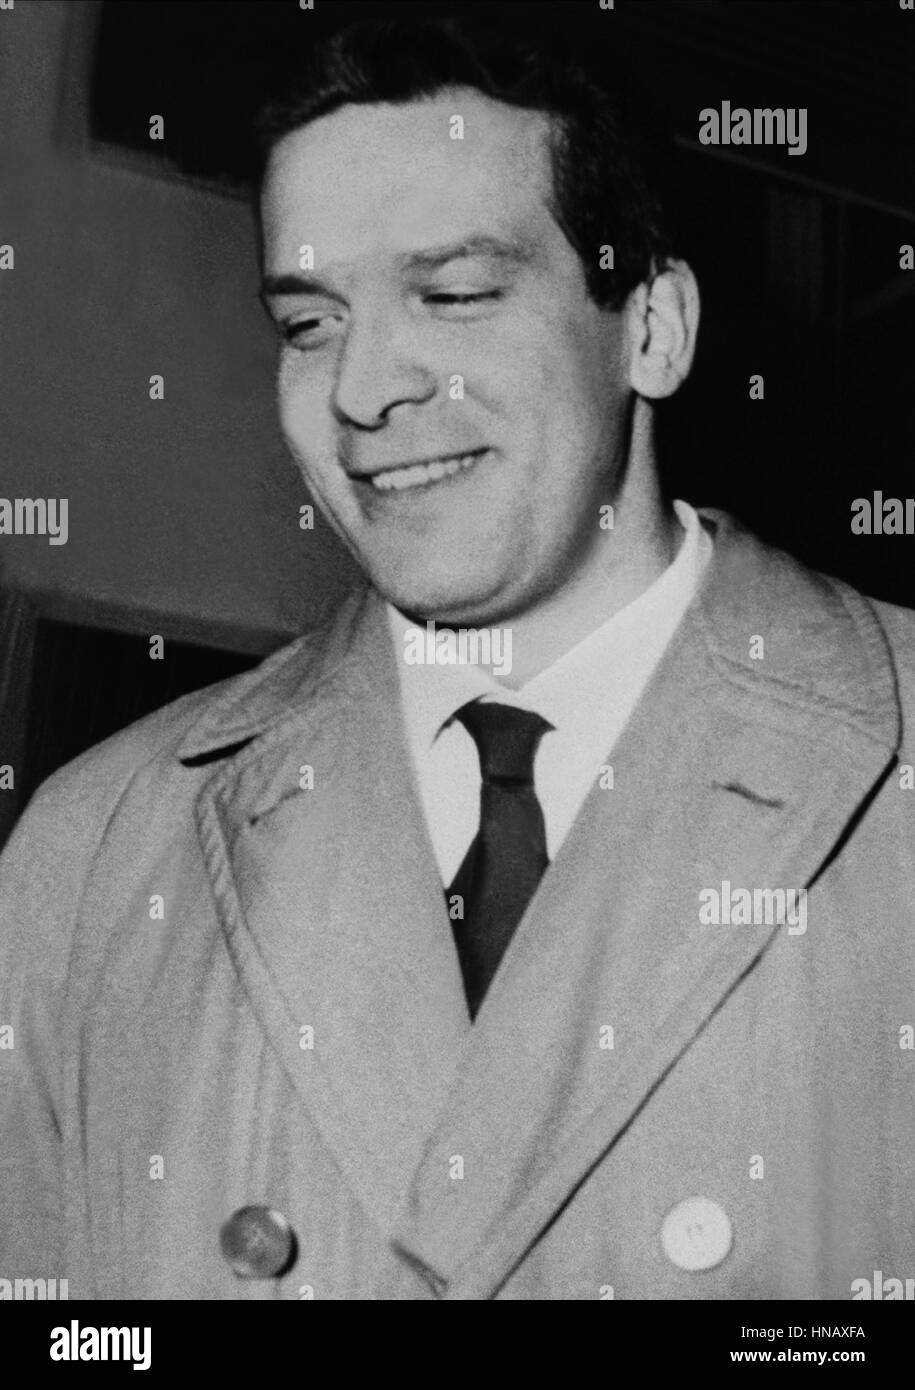 BUD SPENCER ACTOR (1950 Stock Photo - Alamy